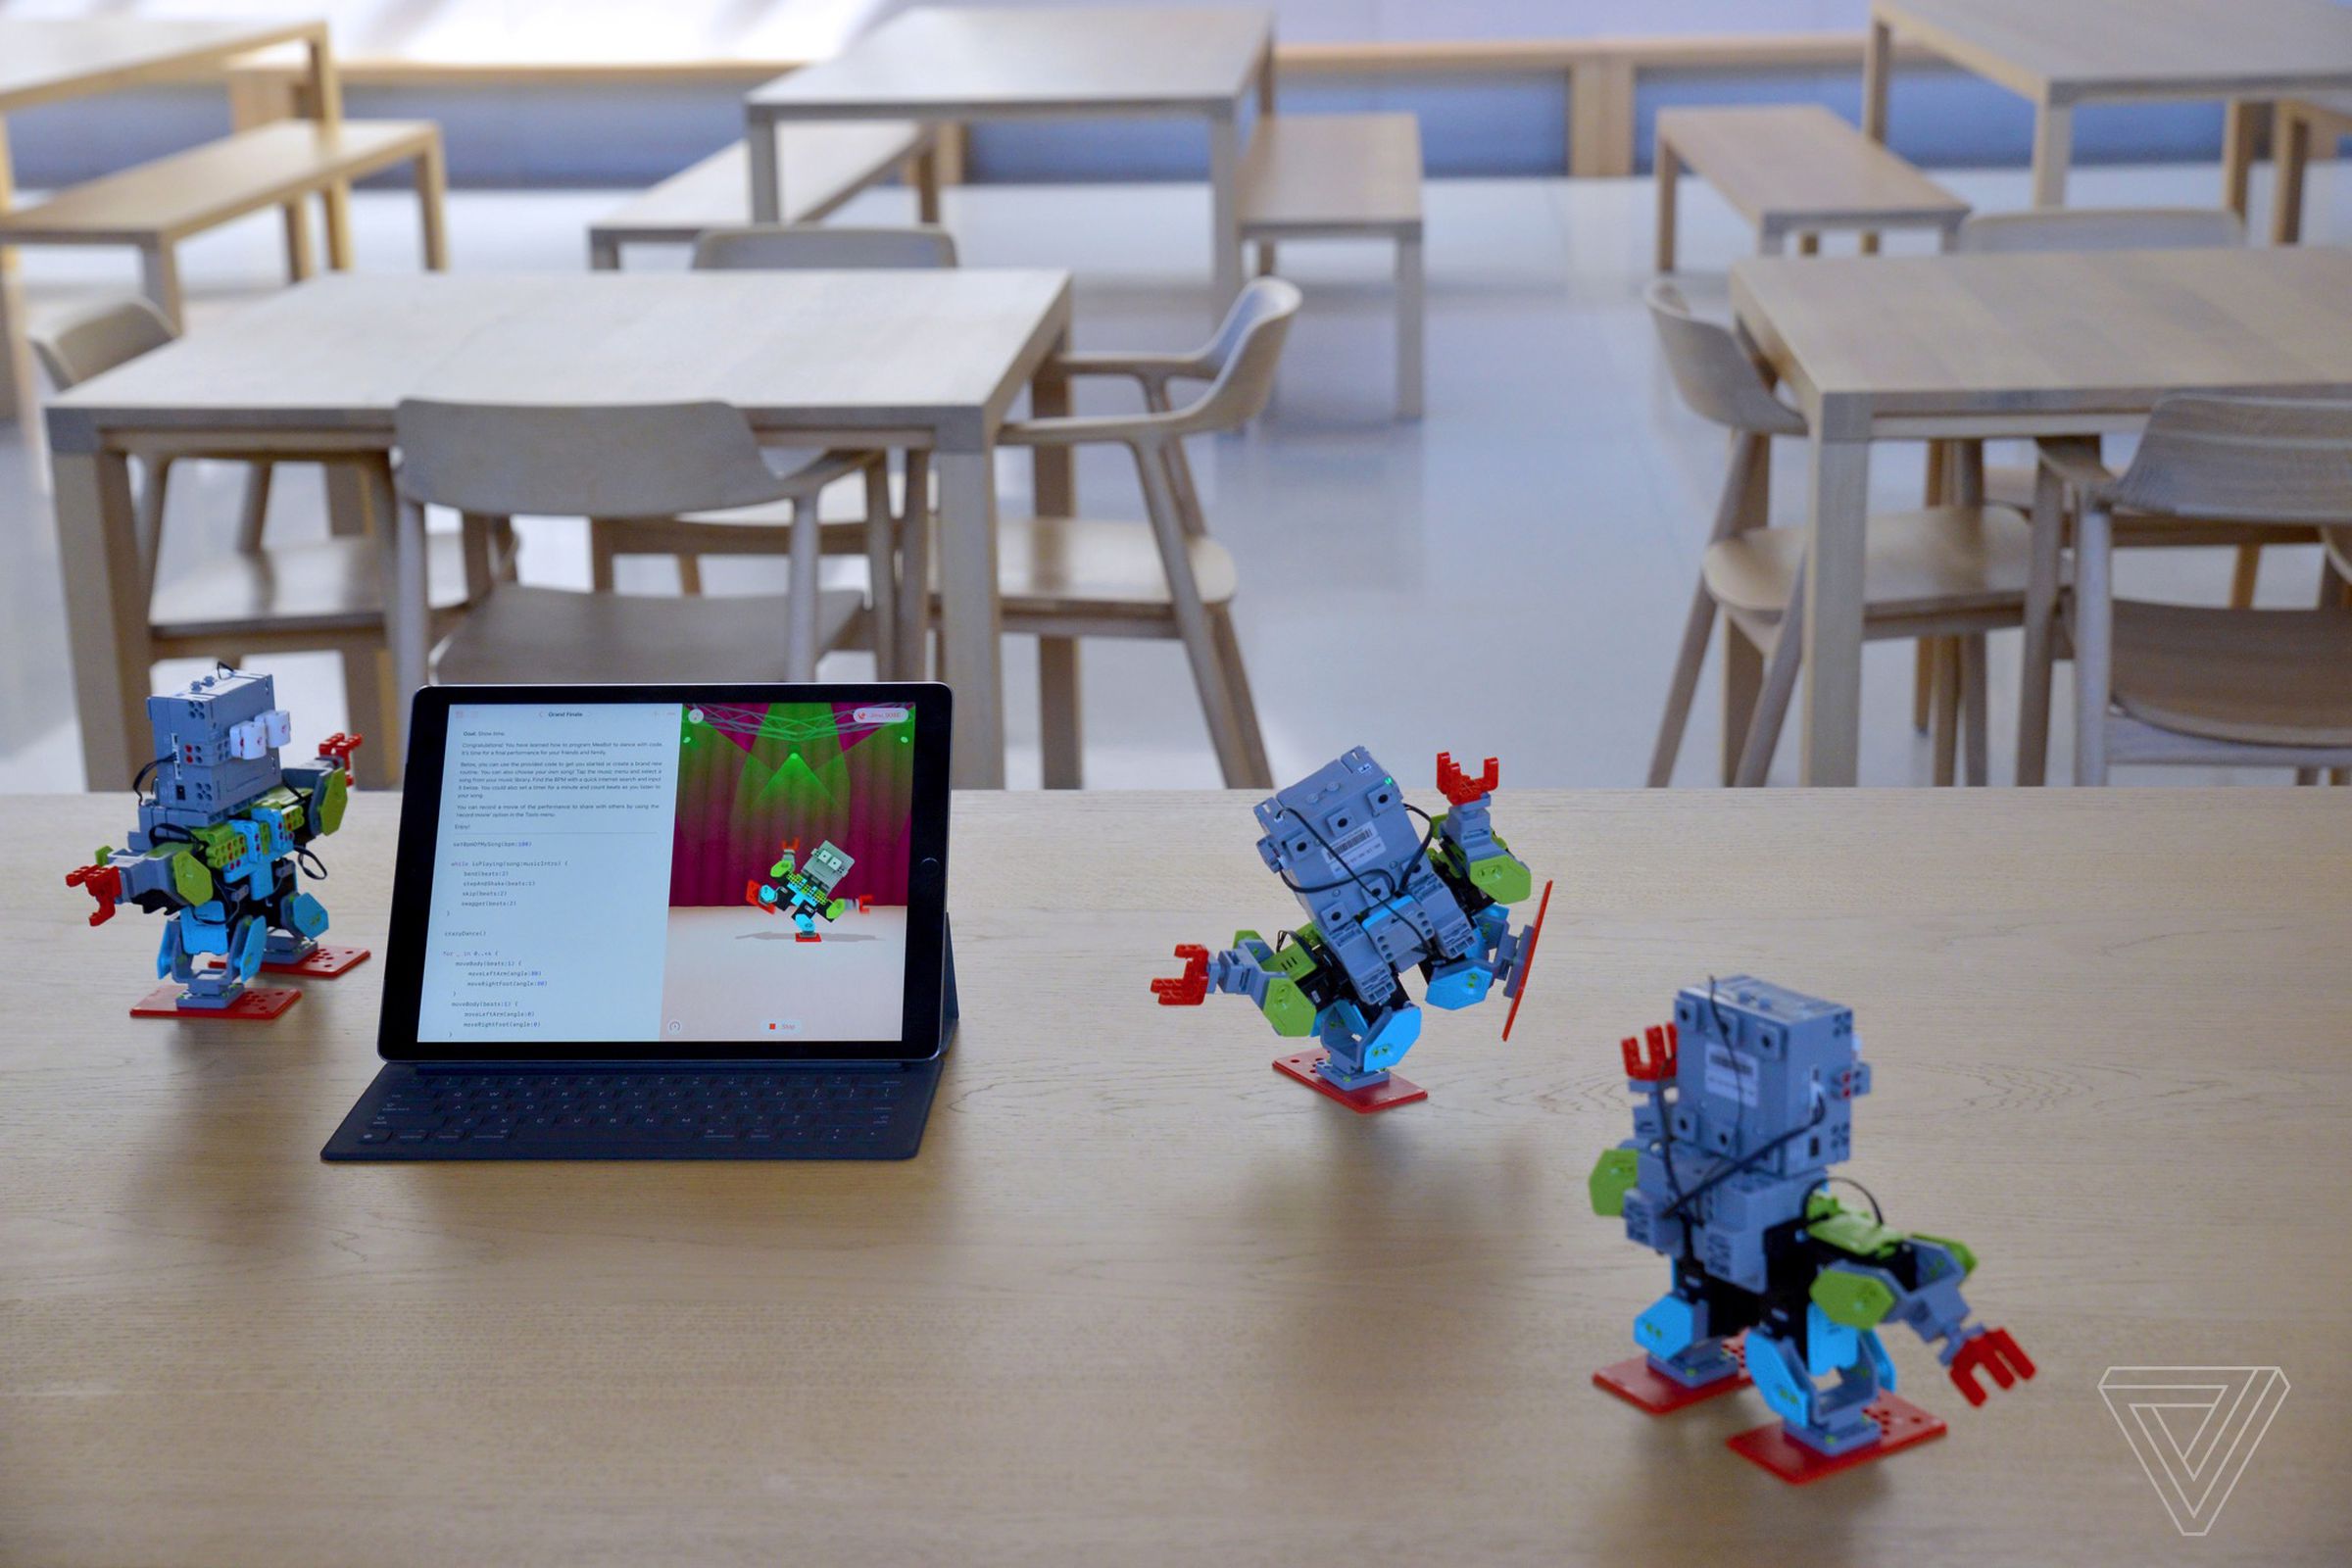 You can make UBTECH’s Jimu robot dance using Apple’s Swift programming language and its Swing Playgrounds coding app. 